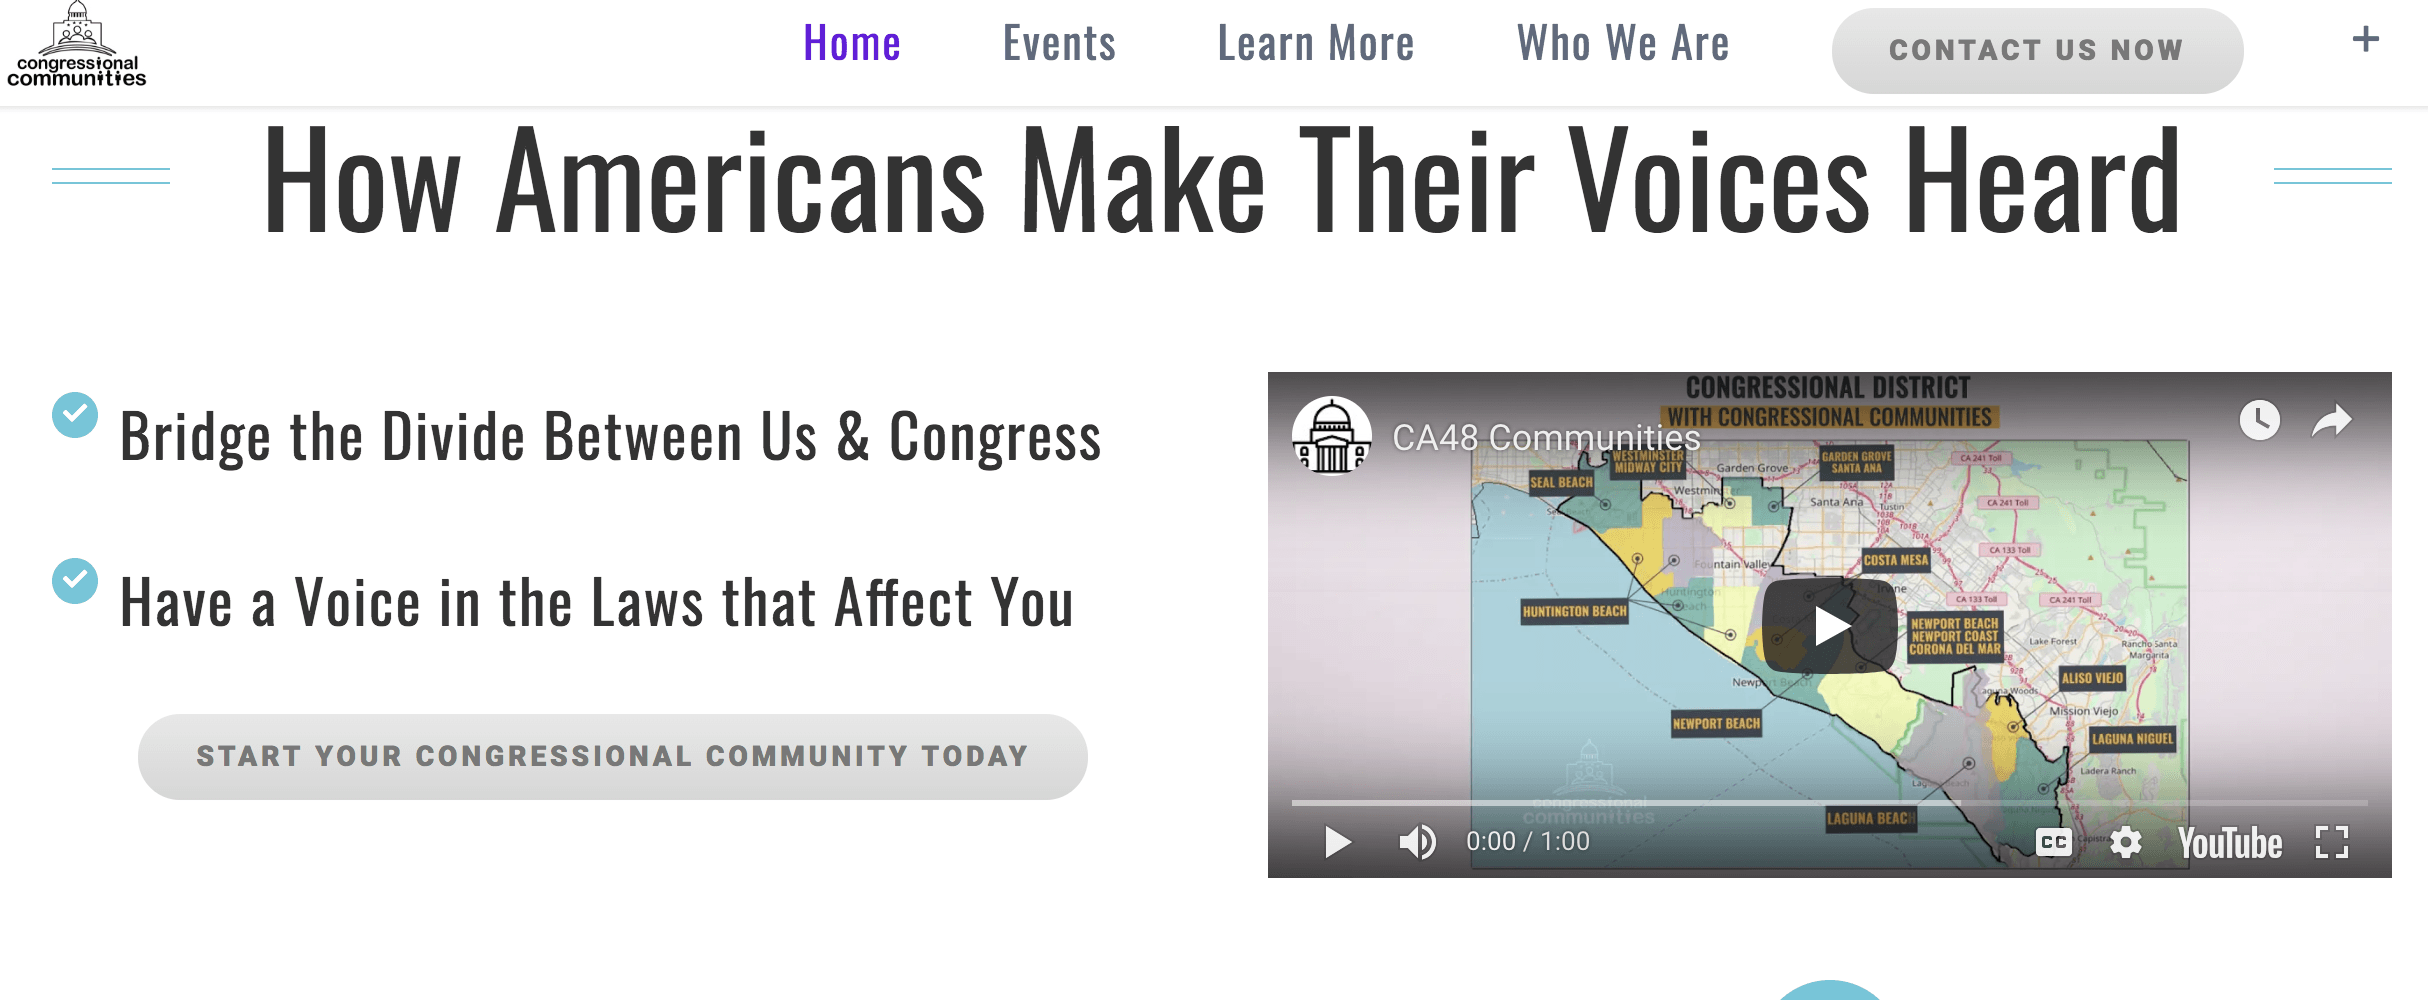 congressional communities website screenshot pop shop america web designers